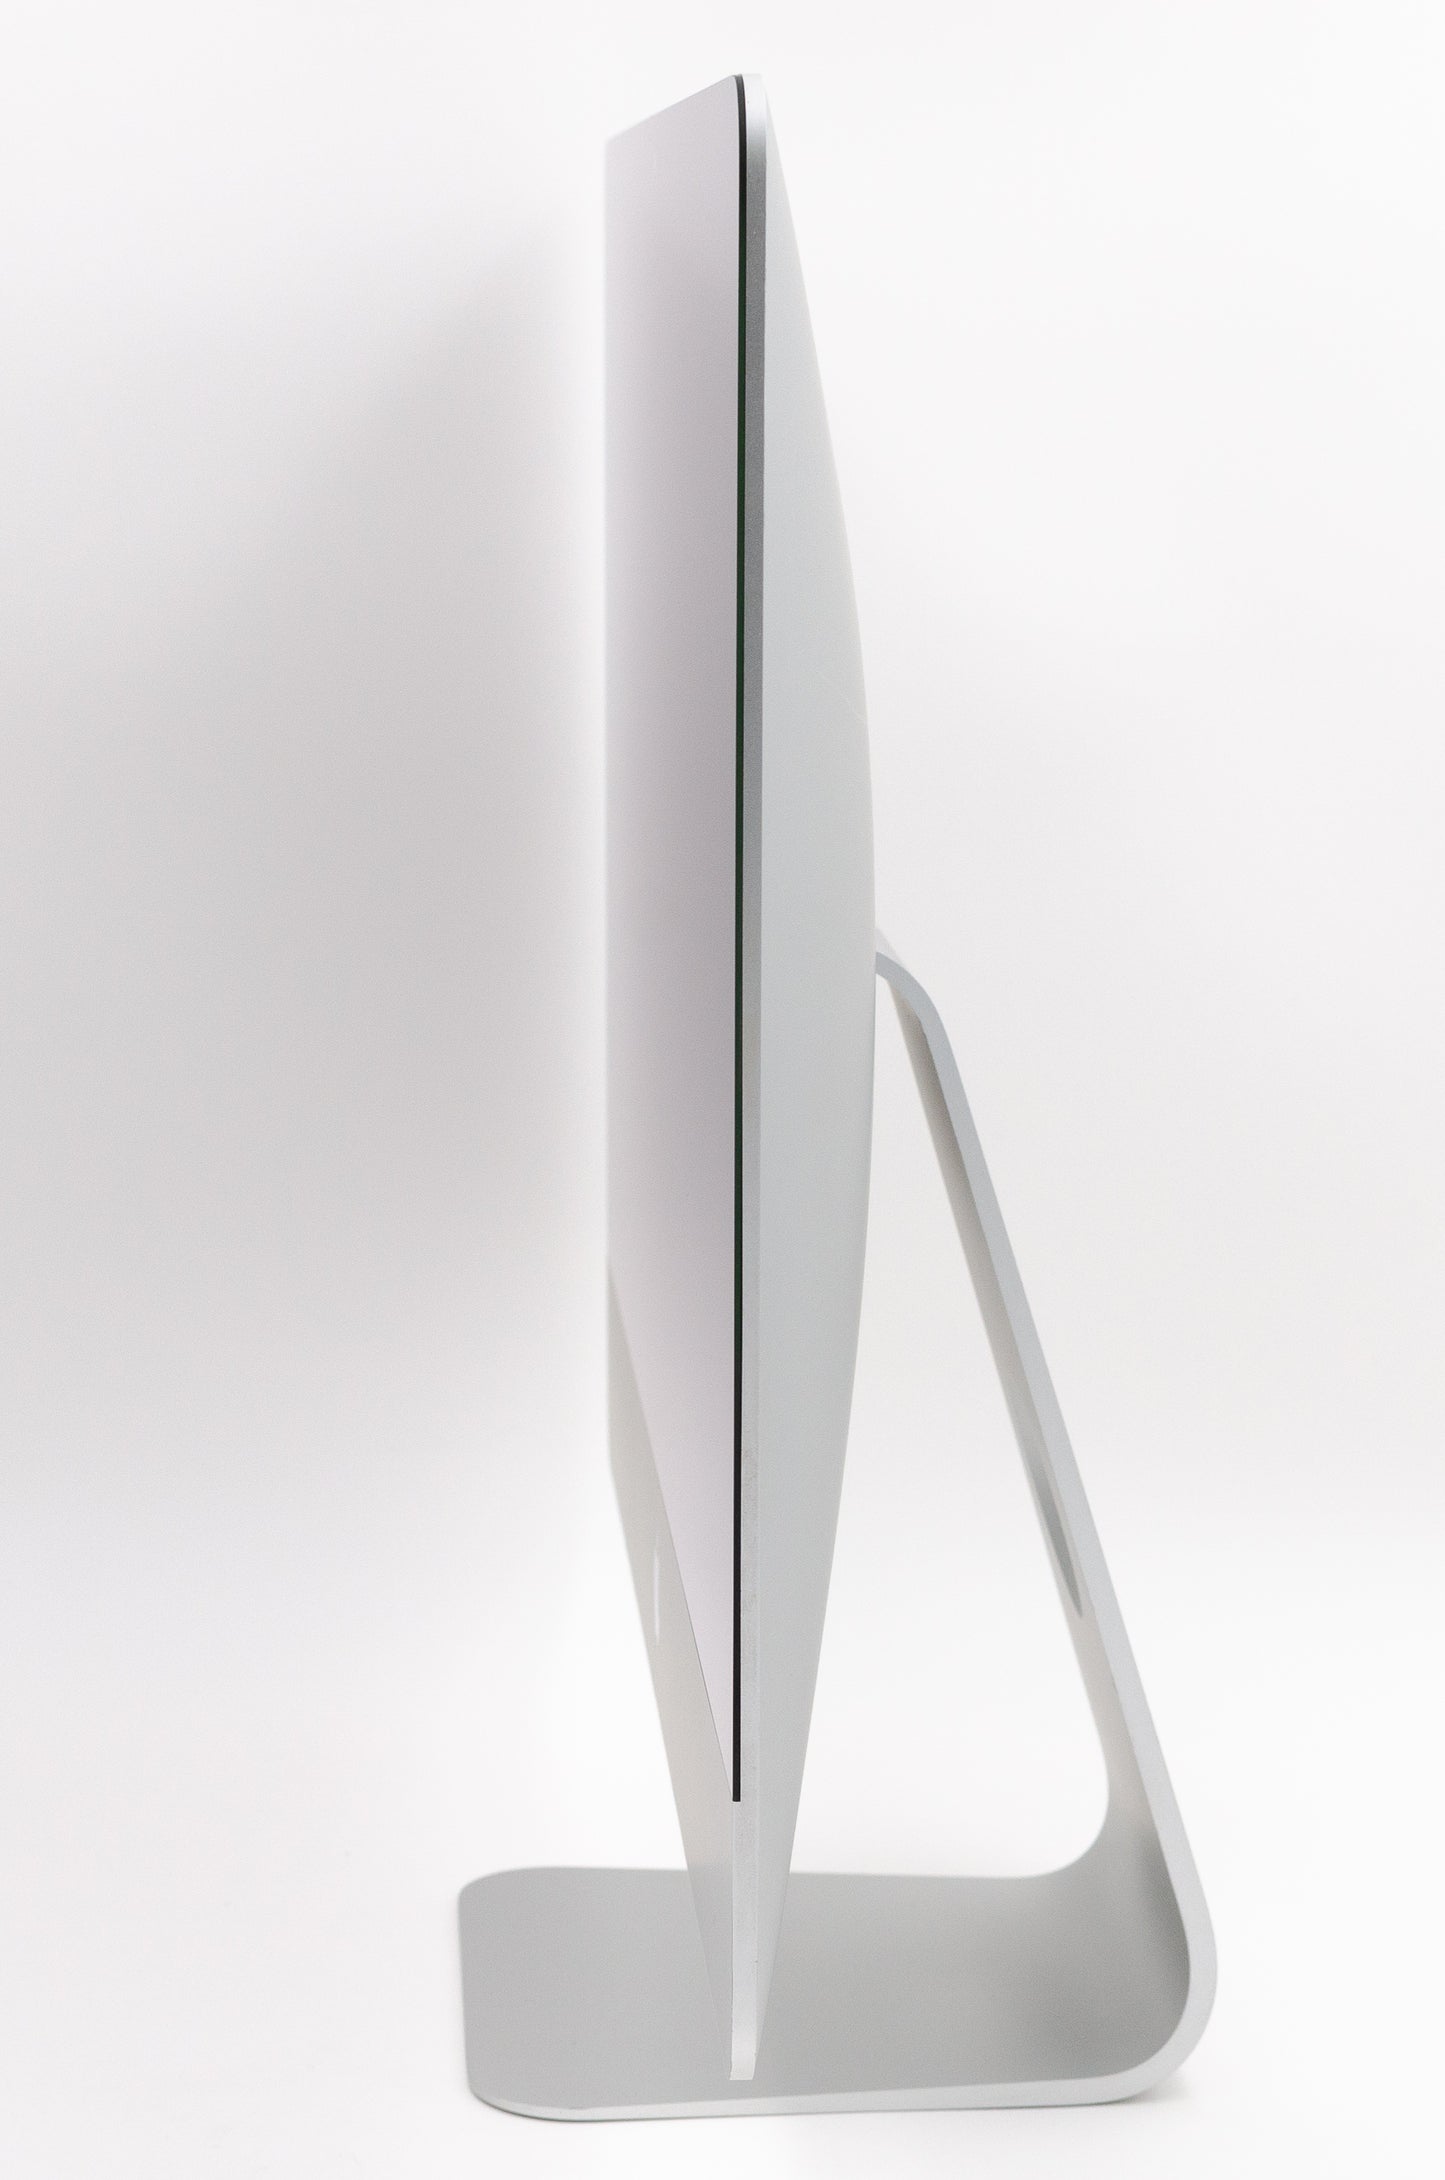 apple-early-2013-21.5-inch-imac-ultra-thin-a1418-aluminum-dci3 - 3.3ghz, 4gb ram, hd 4000 - 512mb gpu-3